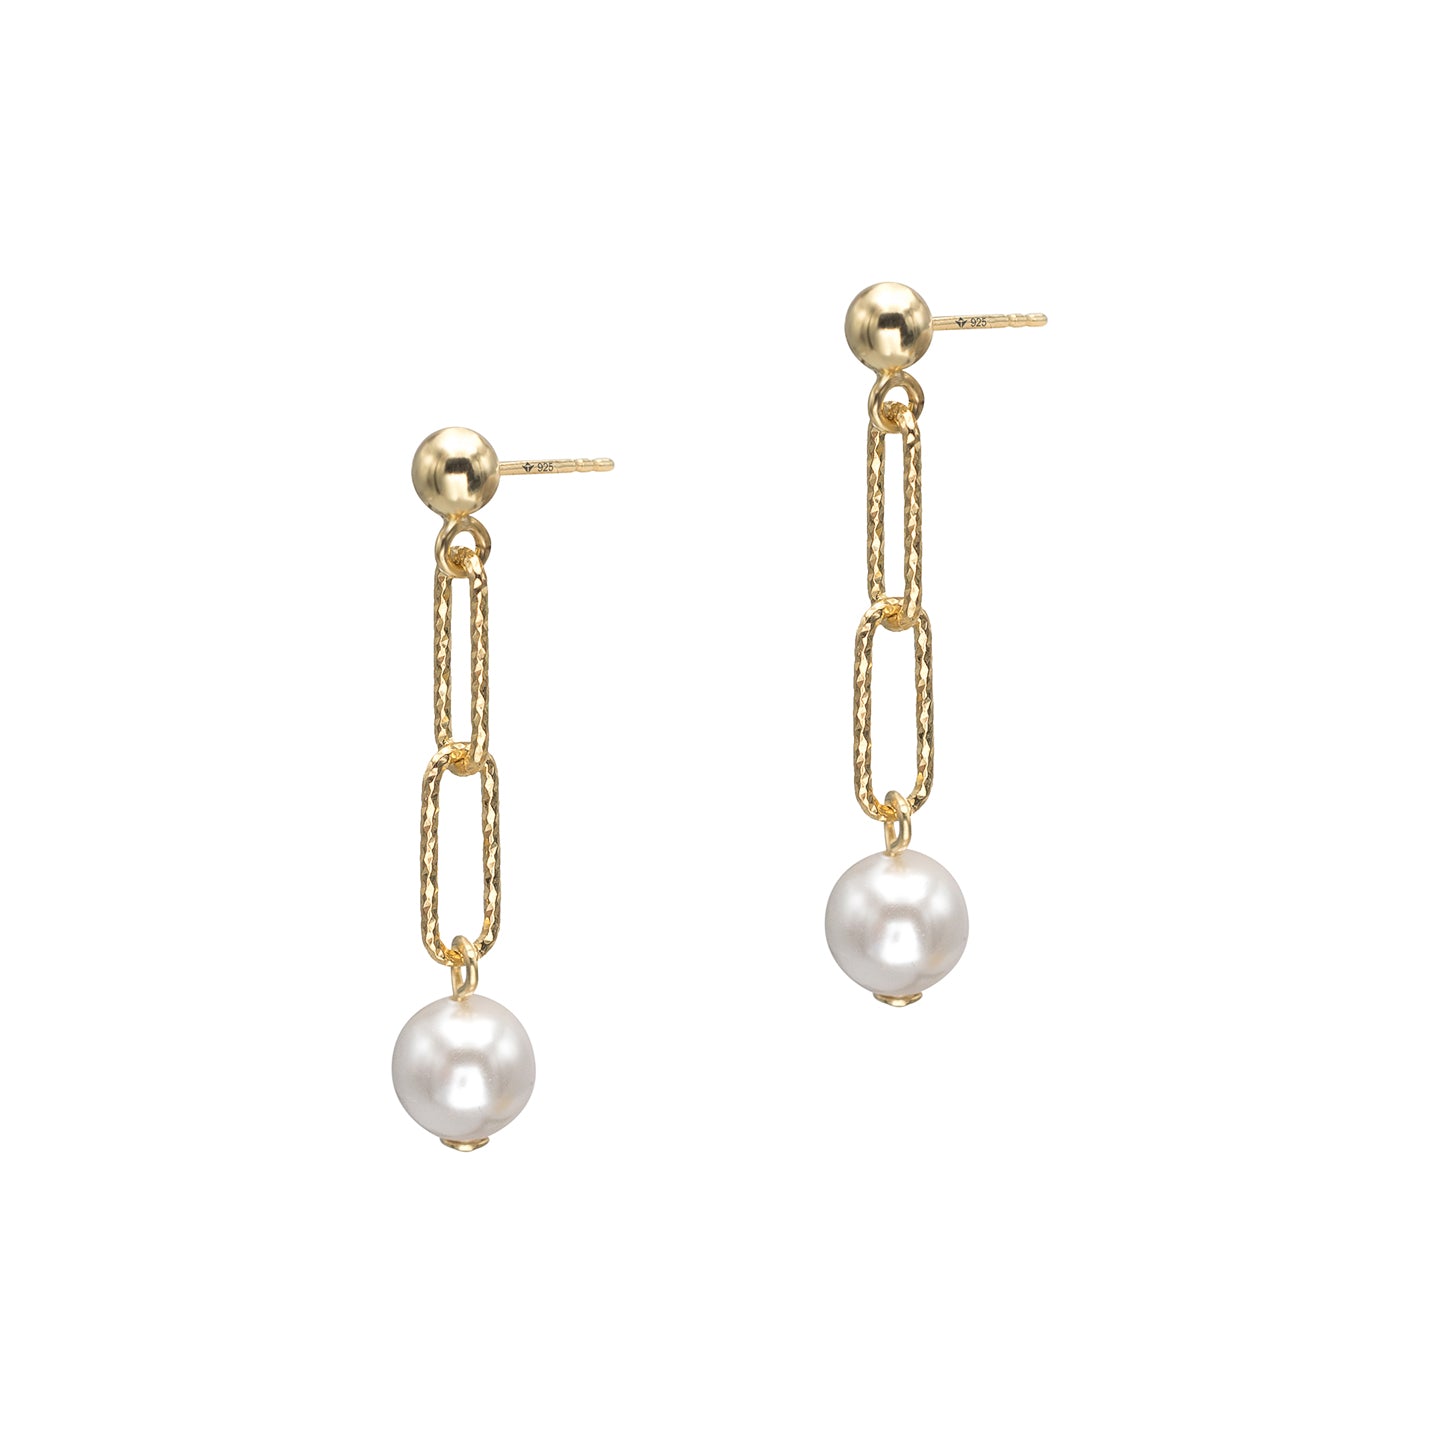 Cercei argint cu perle Masiv Hardwear Pearl - placati aur galben 18K